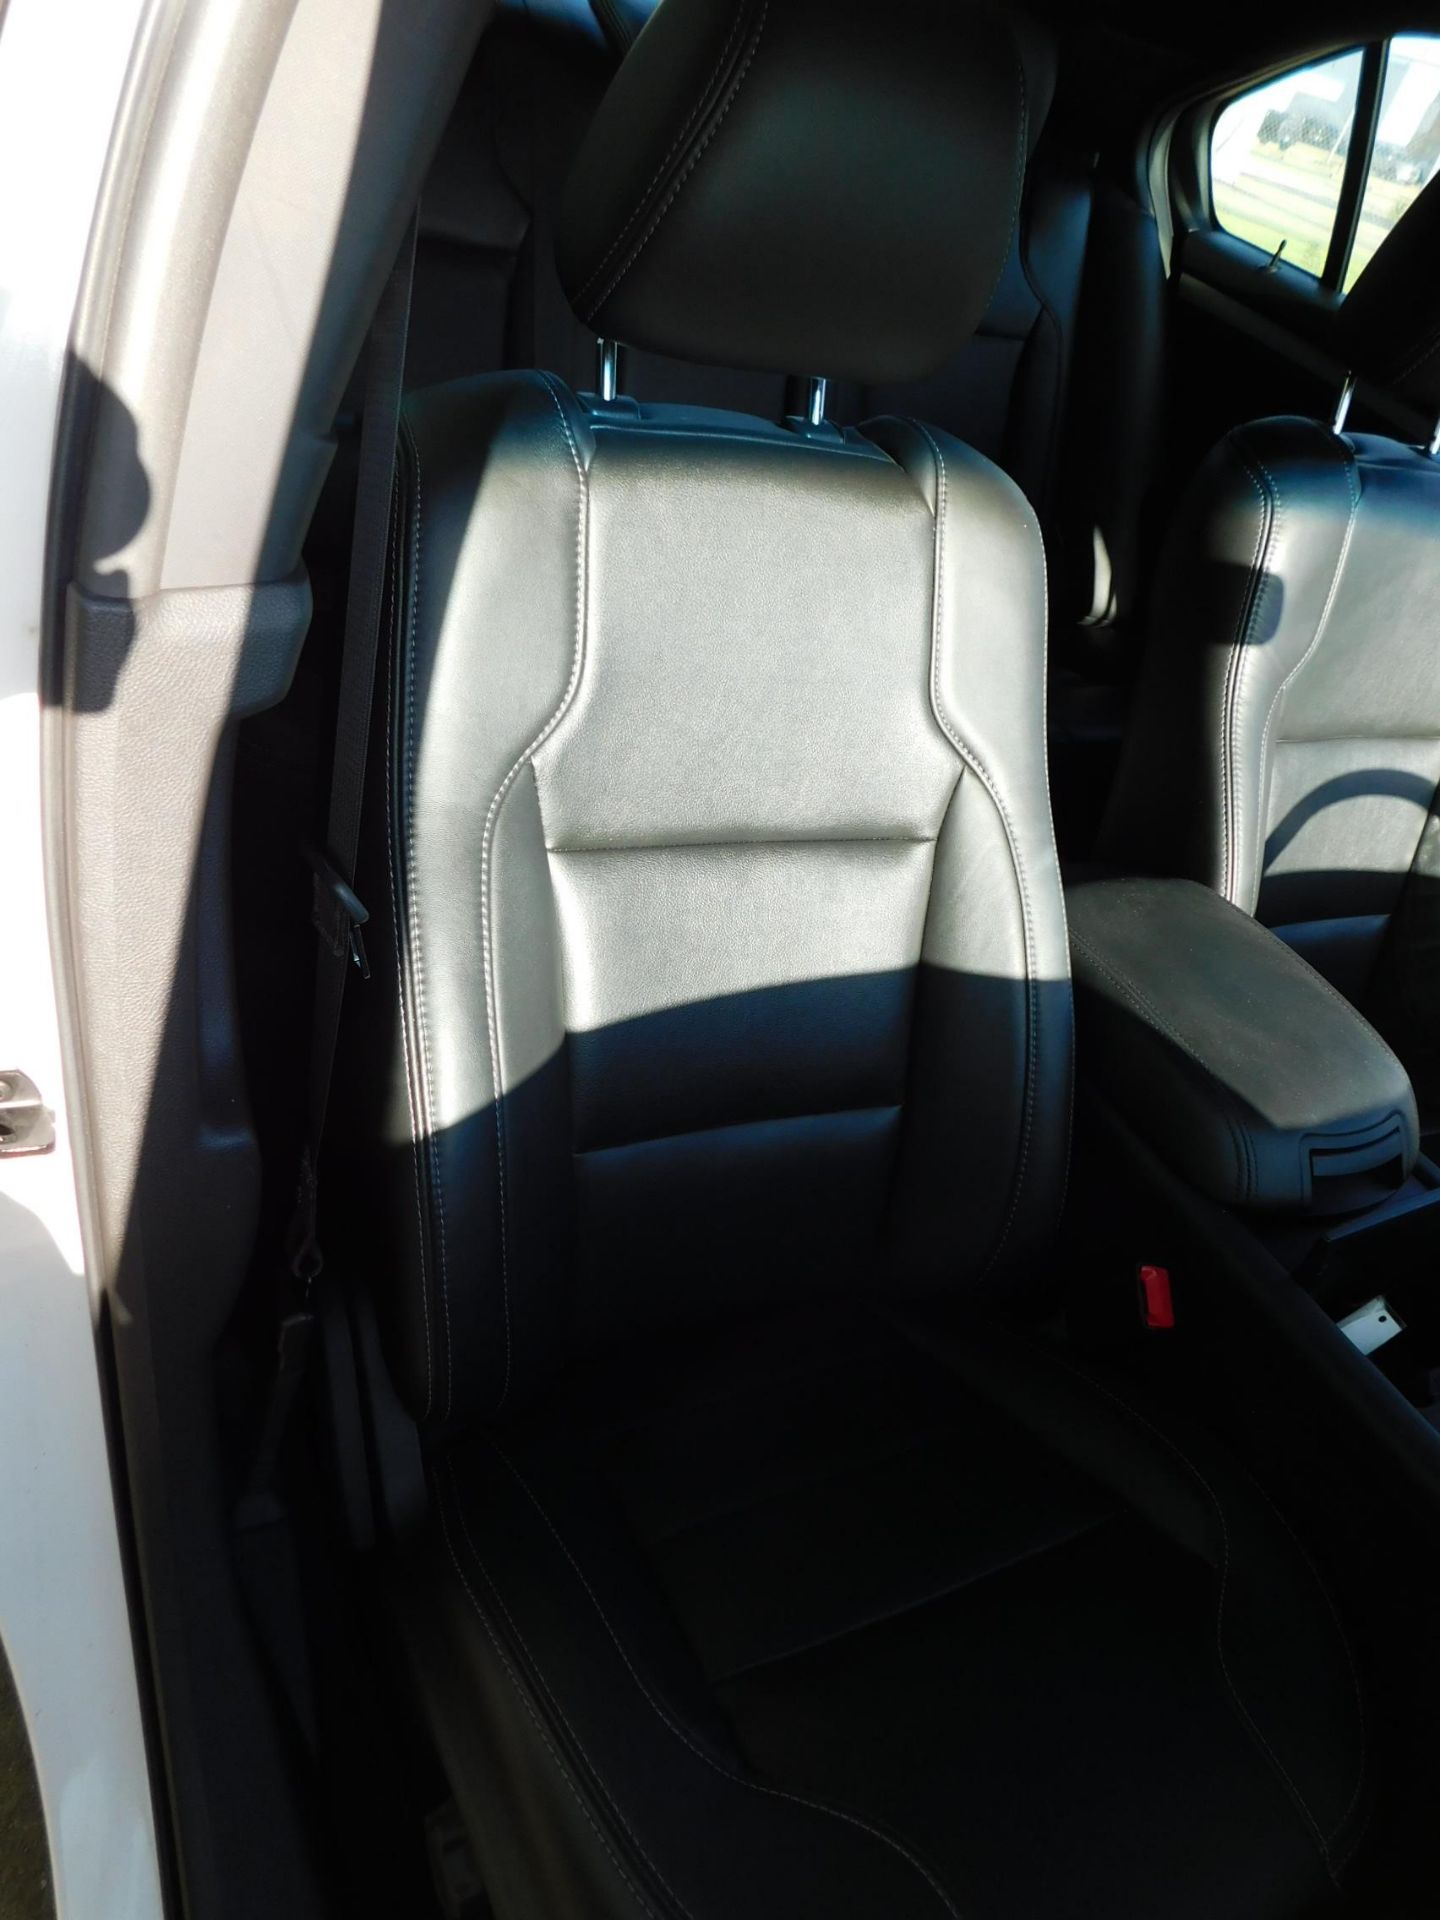 2015 Ford Taurus SEL 4-Door Sedan, vin 1FAHP2E80FG182717, Automatic Transmission, PW,PL,AC,Leather - Image 37 of 42